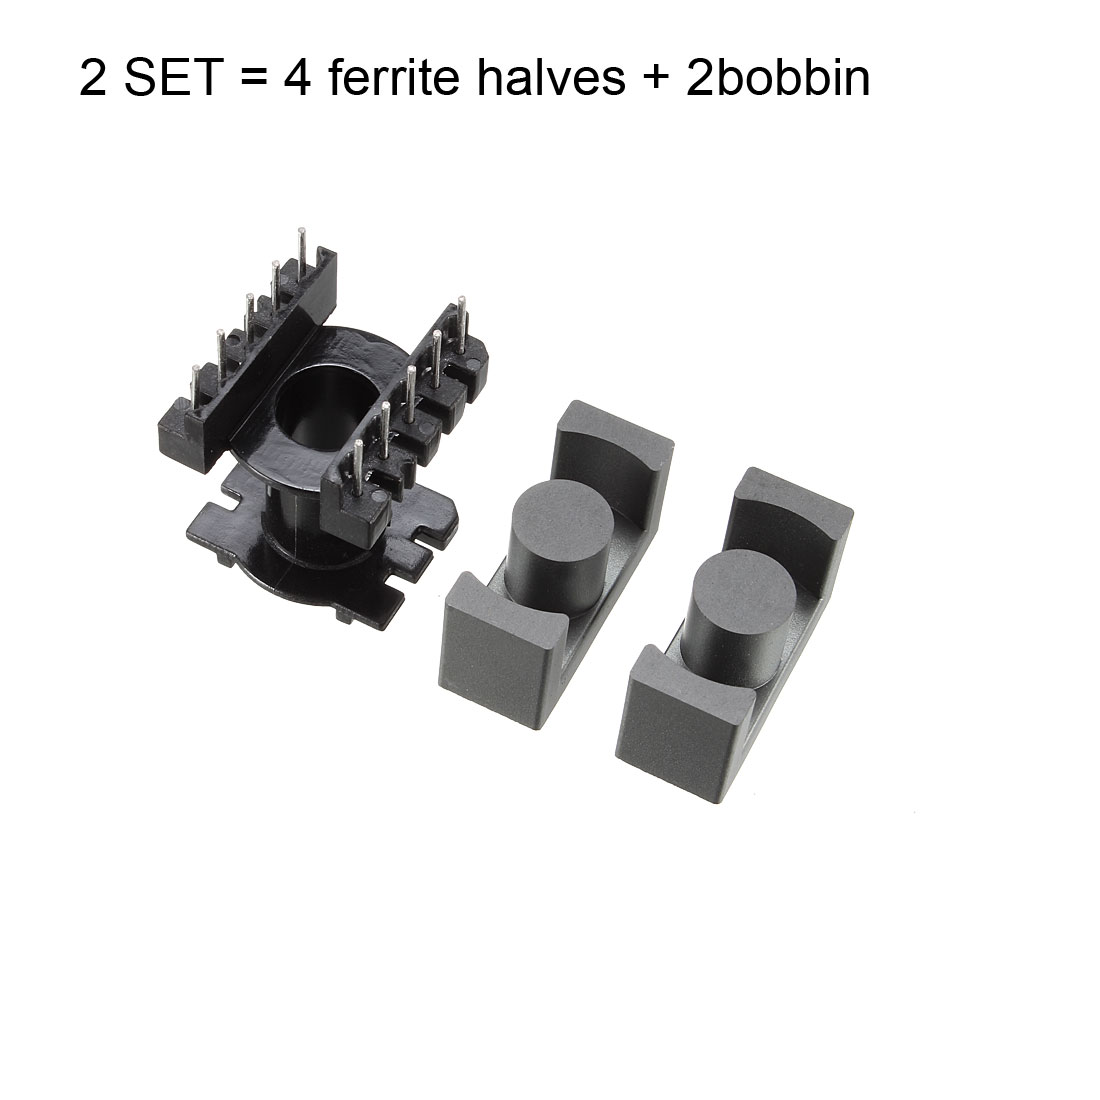 Unique Bargains 2 Sets EC28 5+5pin Transformer Bobbin PC40 Core 4 Ferrite Halves+2 Bobbin